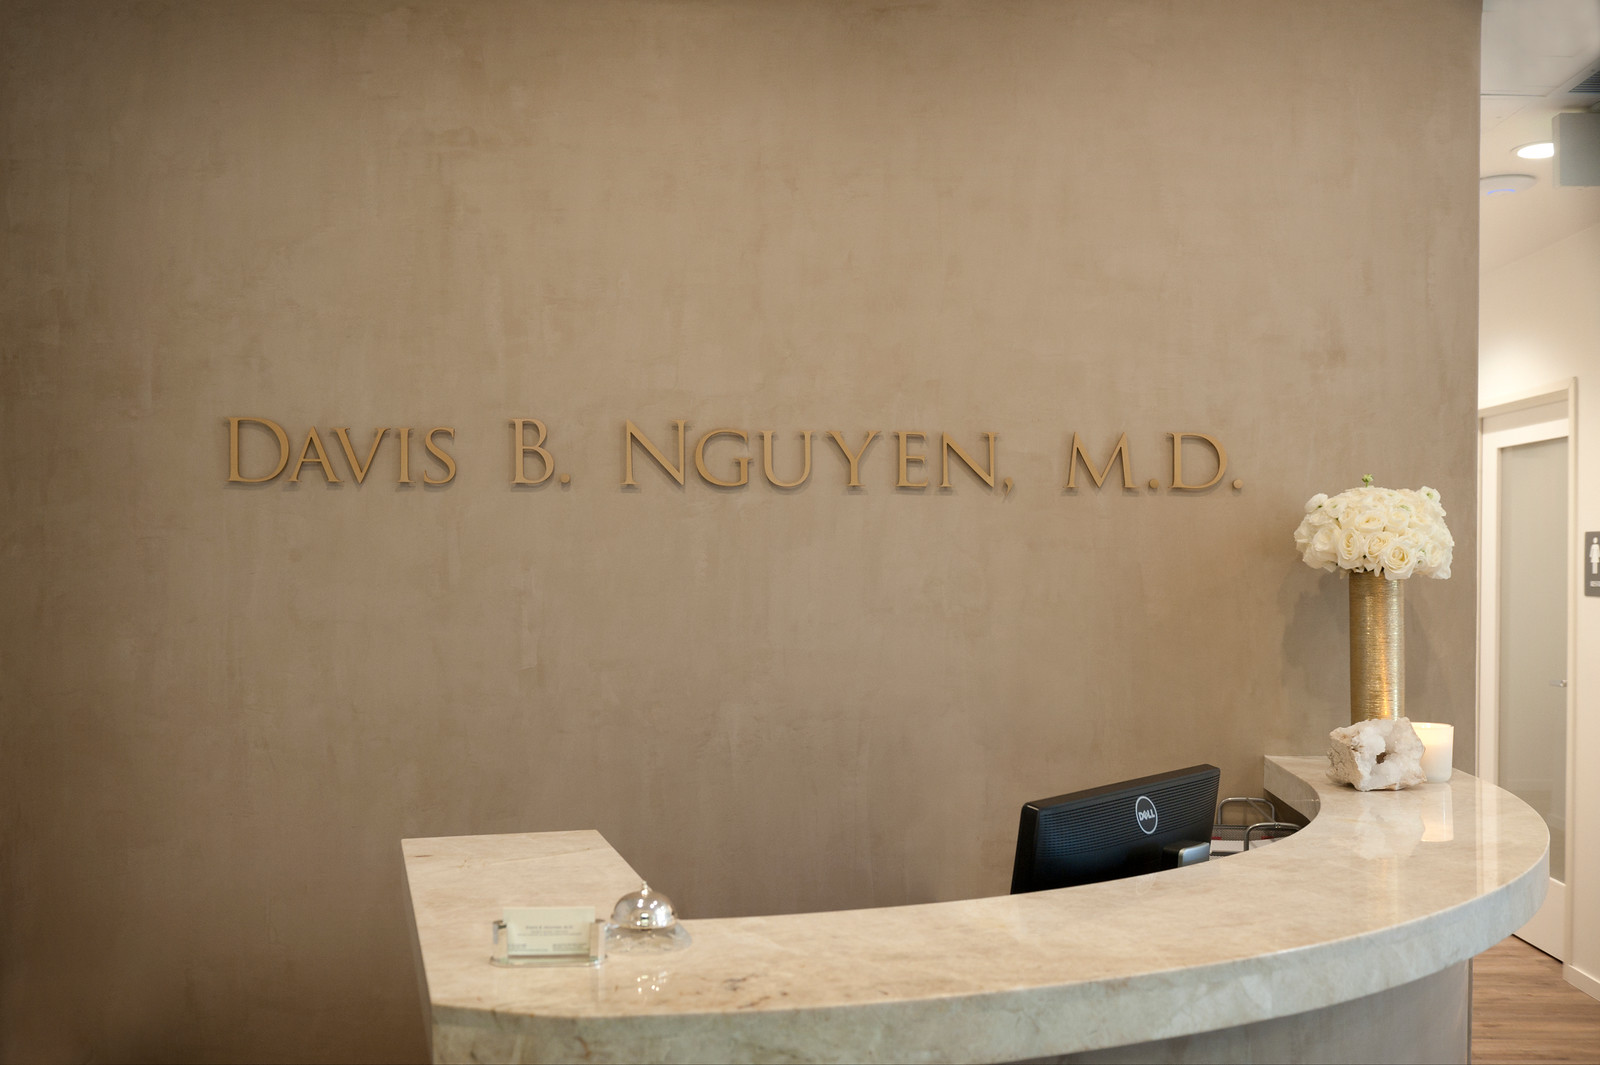 Dr. Nguyen's Beverly Hills medical office exam room.